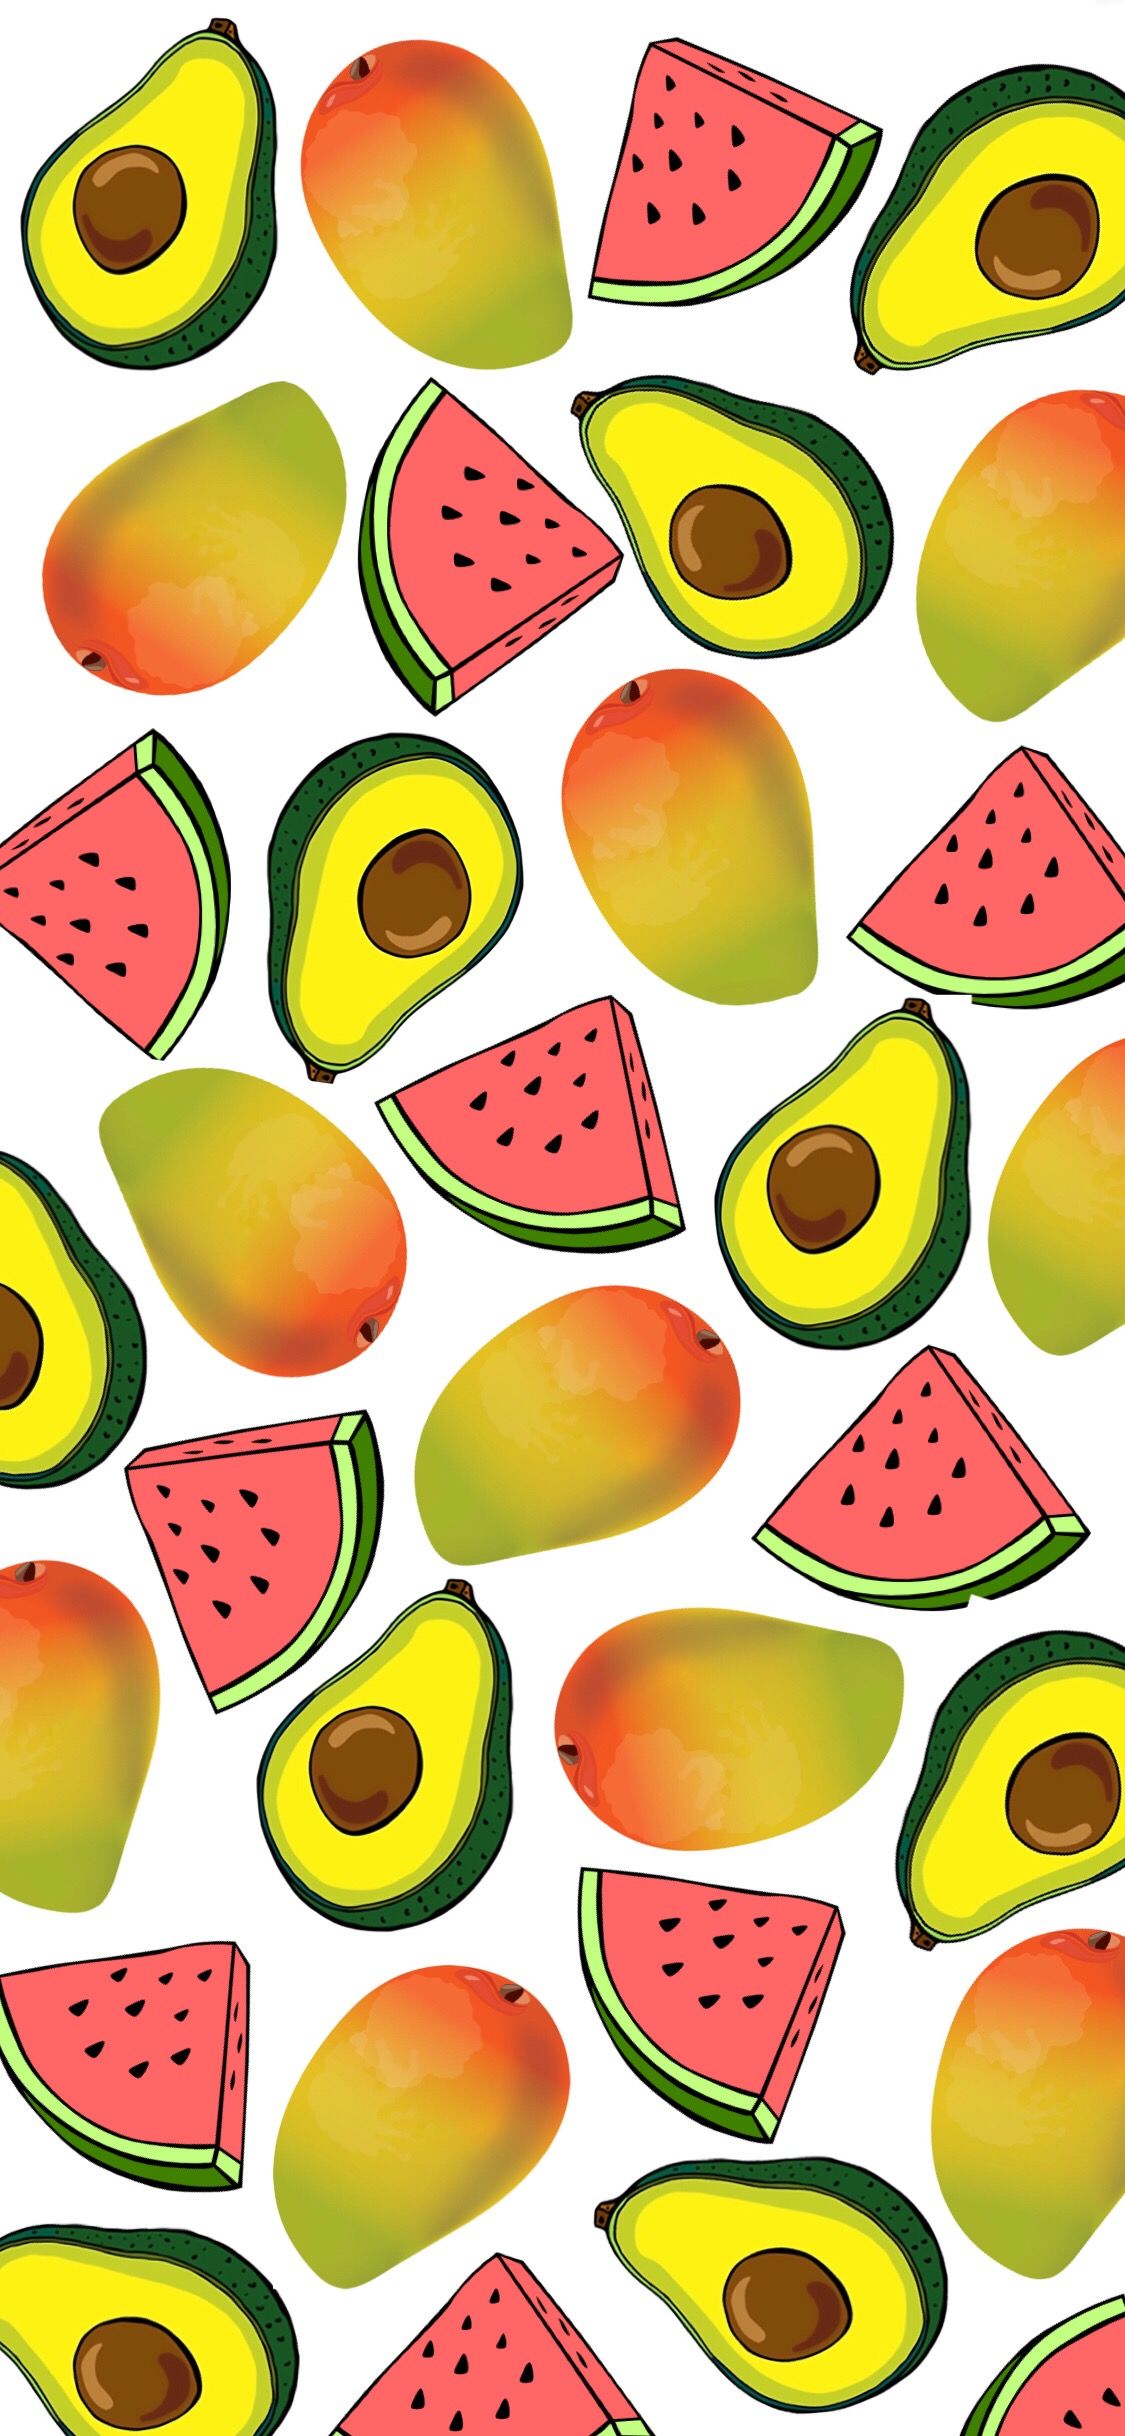 watermellon #avocado #mango #iphone #wallpaper #background. Fruit wallpaper, Tumblr iphone wallpaper, Aesthetic iphone wallpaper